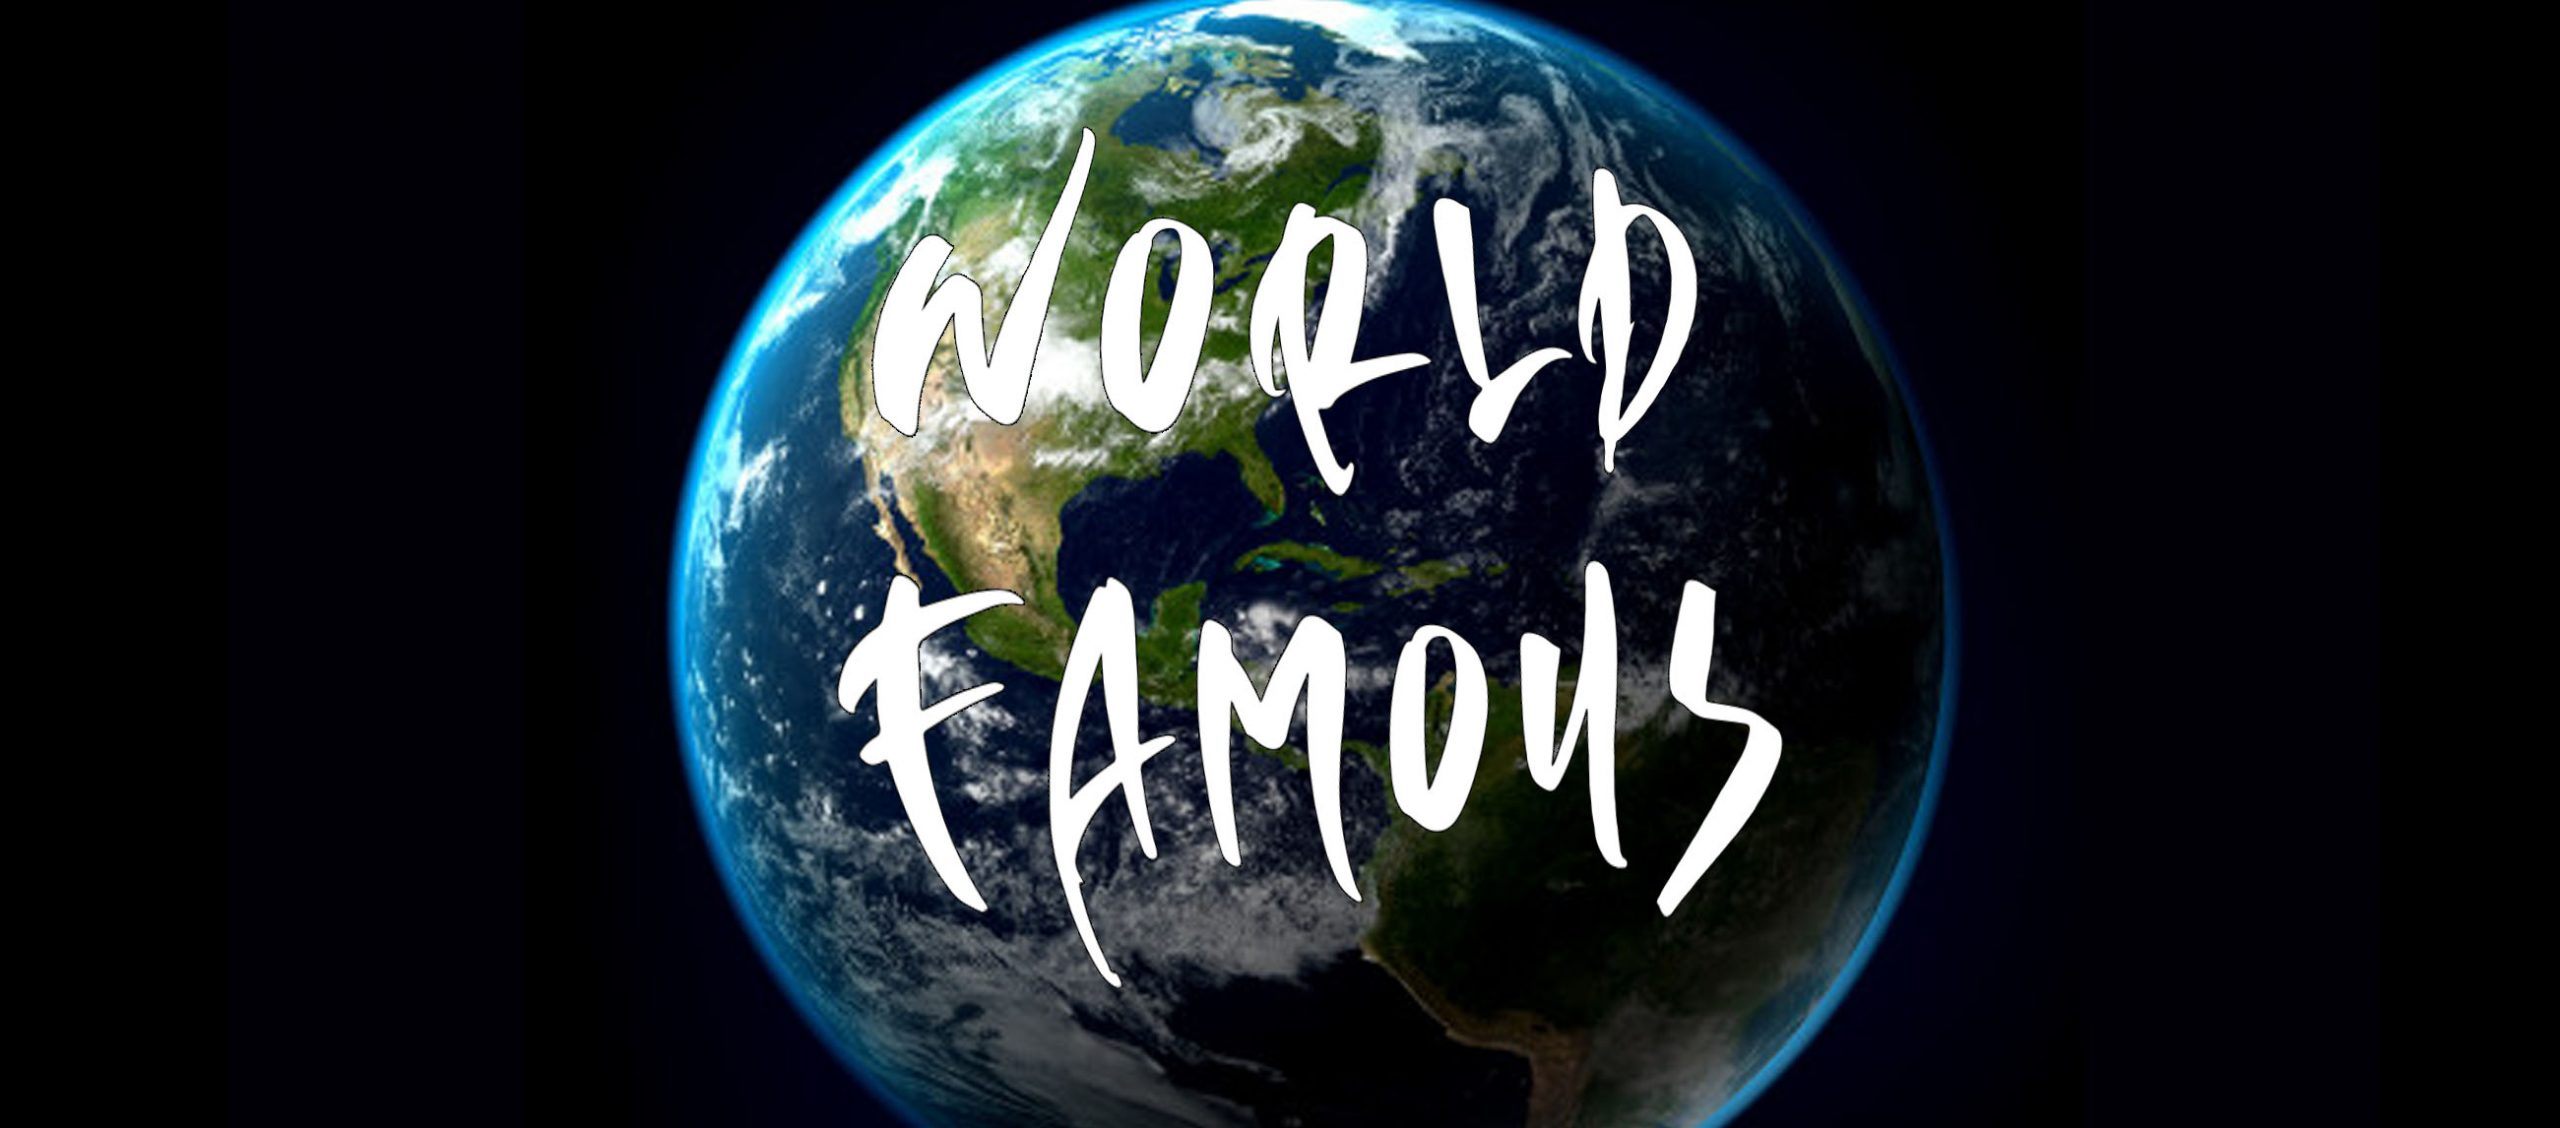 world famous